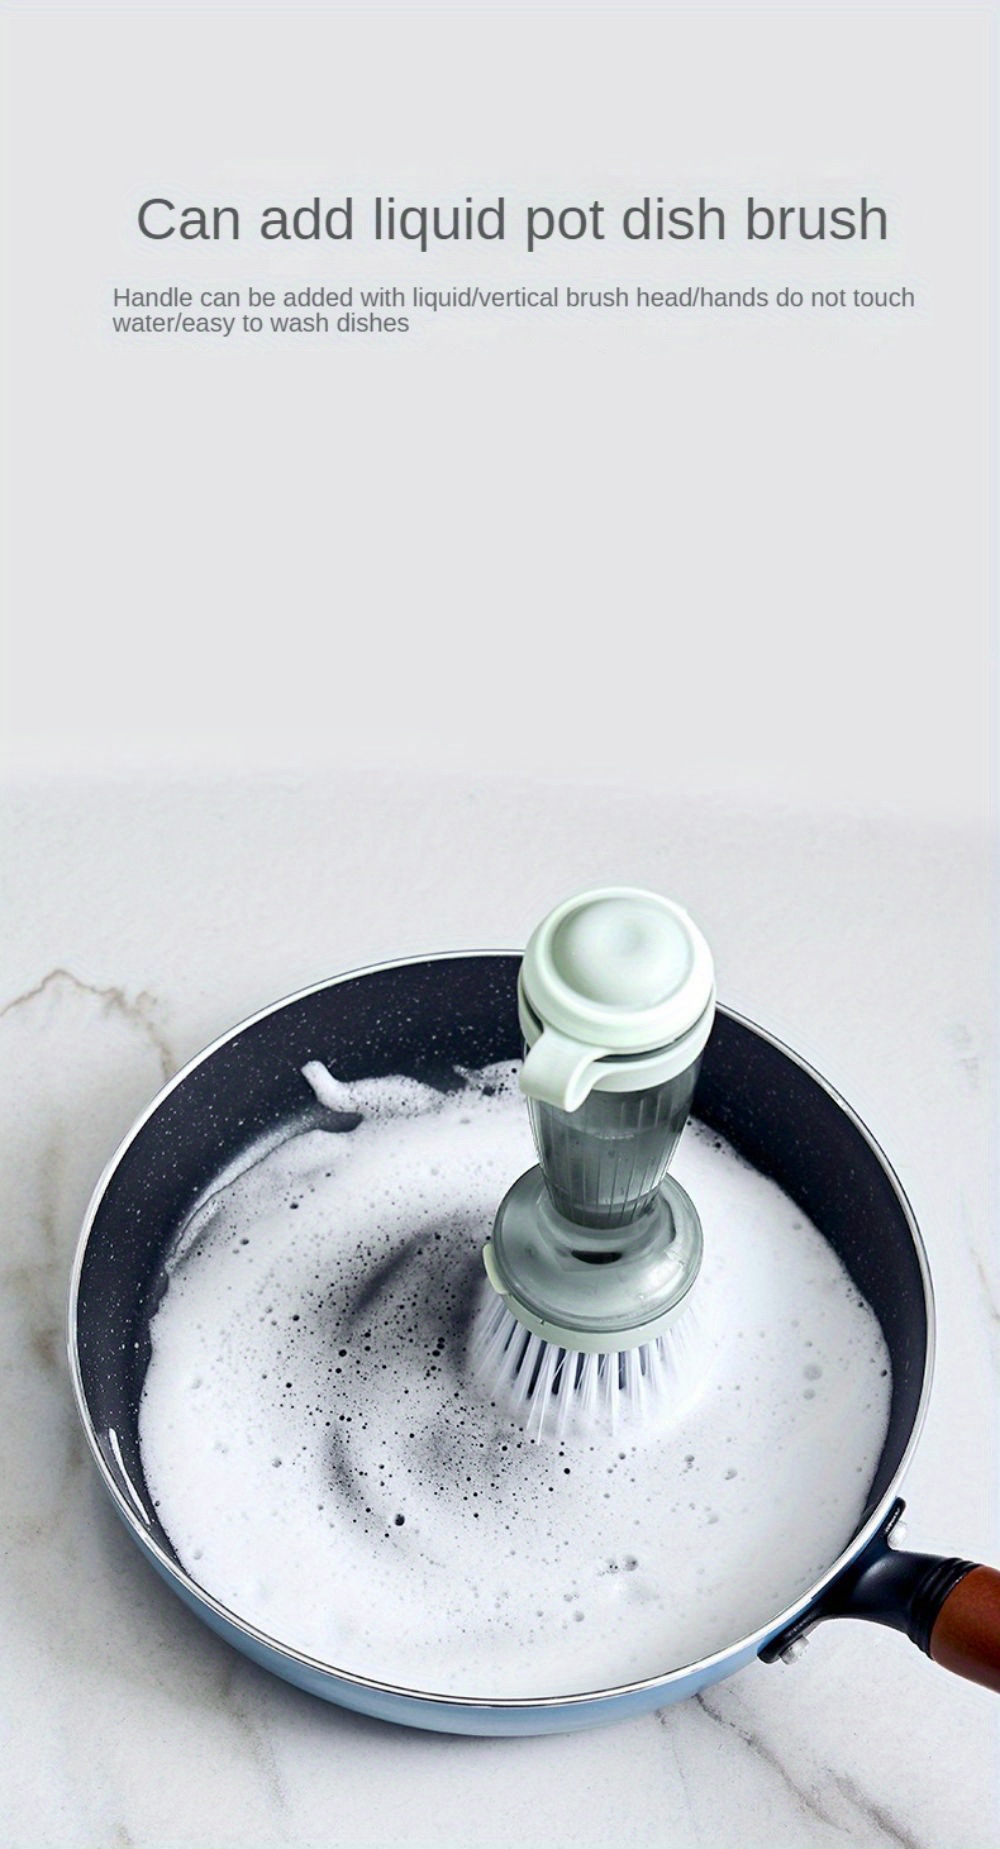 Pot Dish Brush Brushes Kitchen Supplies Silicone 120ml Pp Long